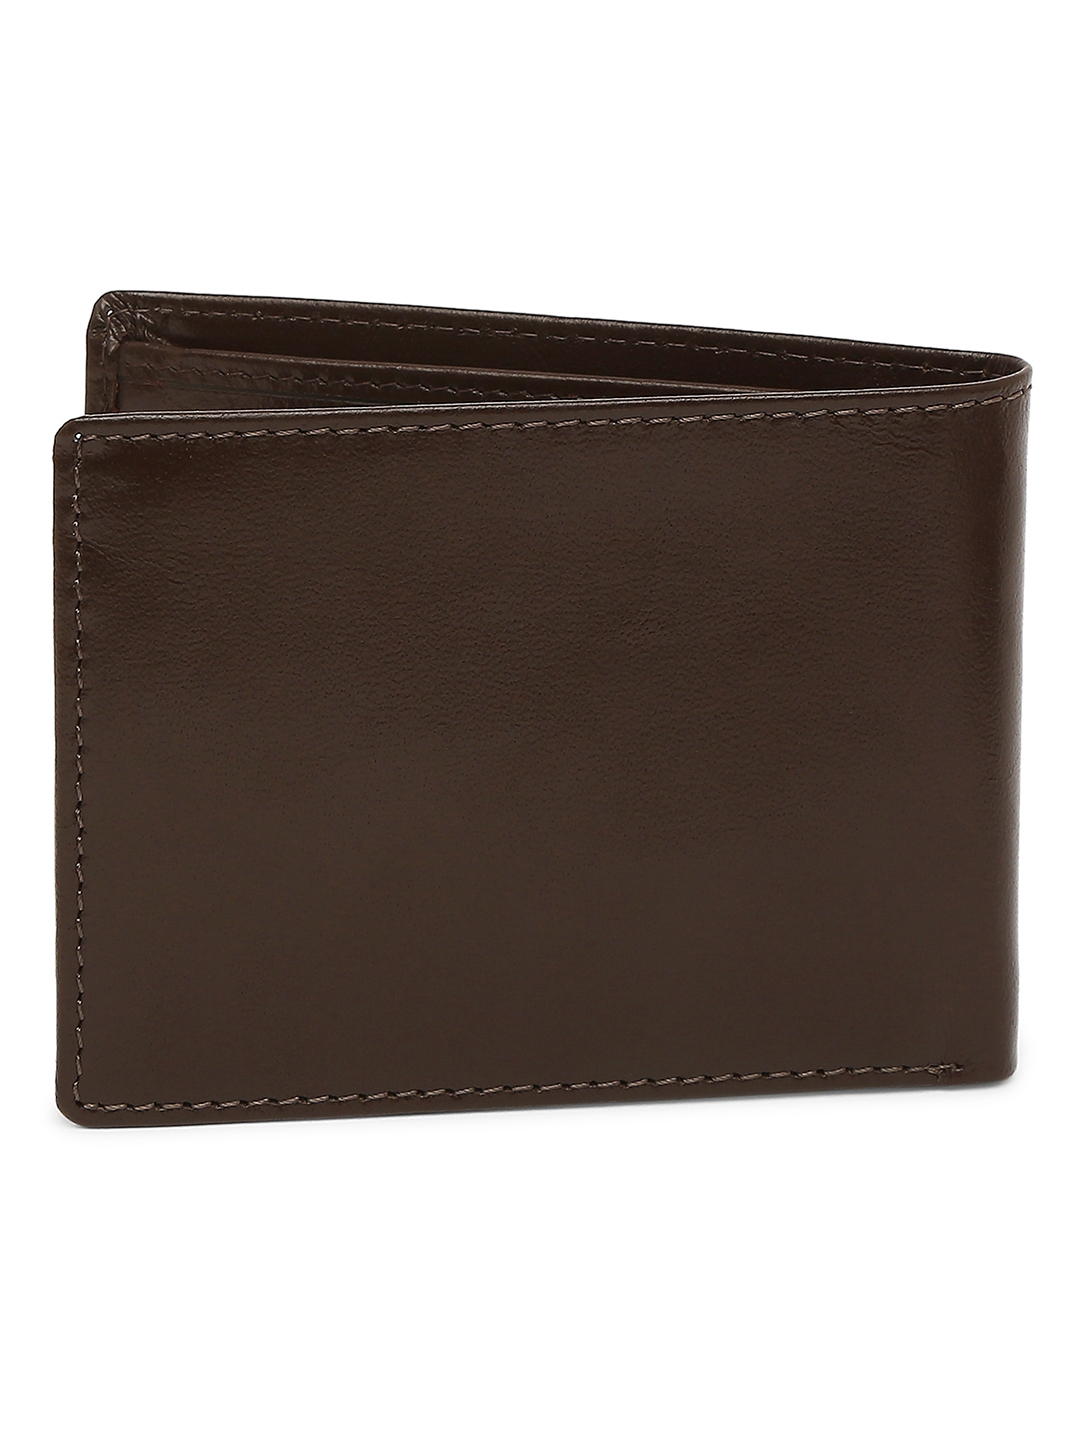 Spykar | Spykar Brown Leather Wallet